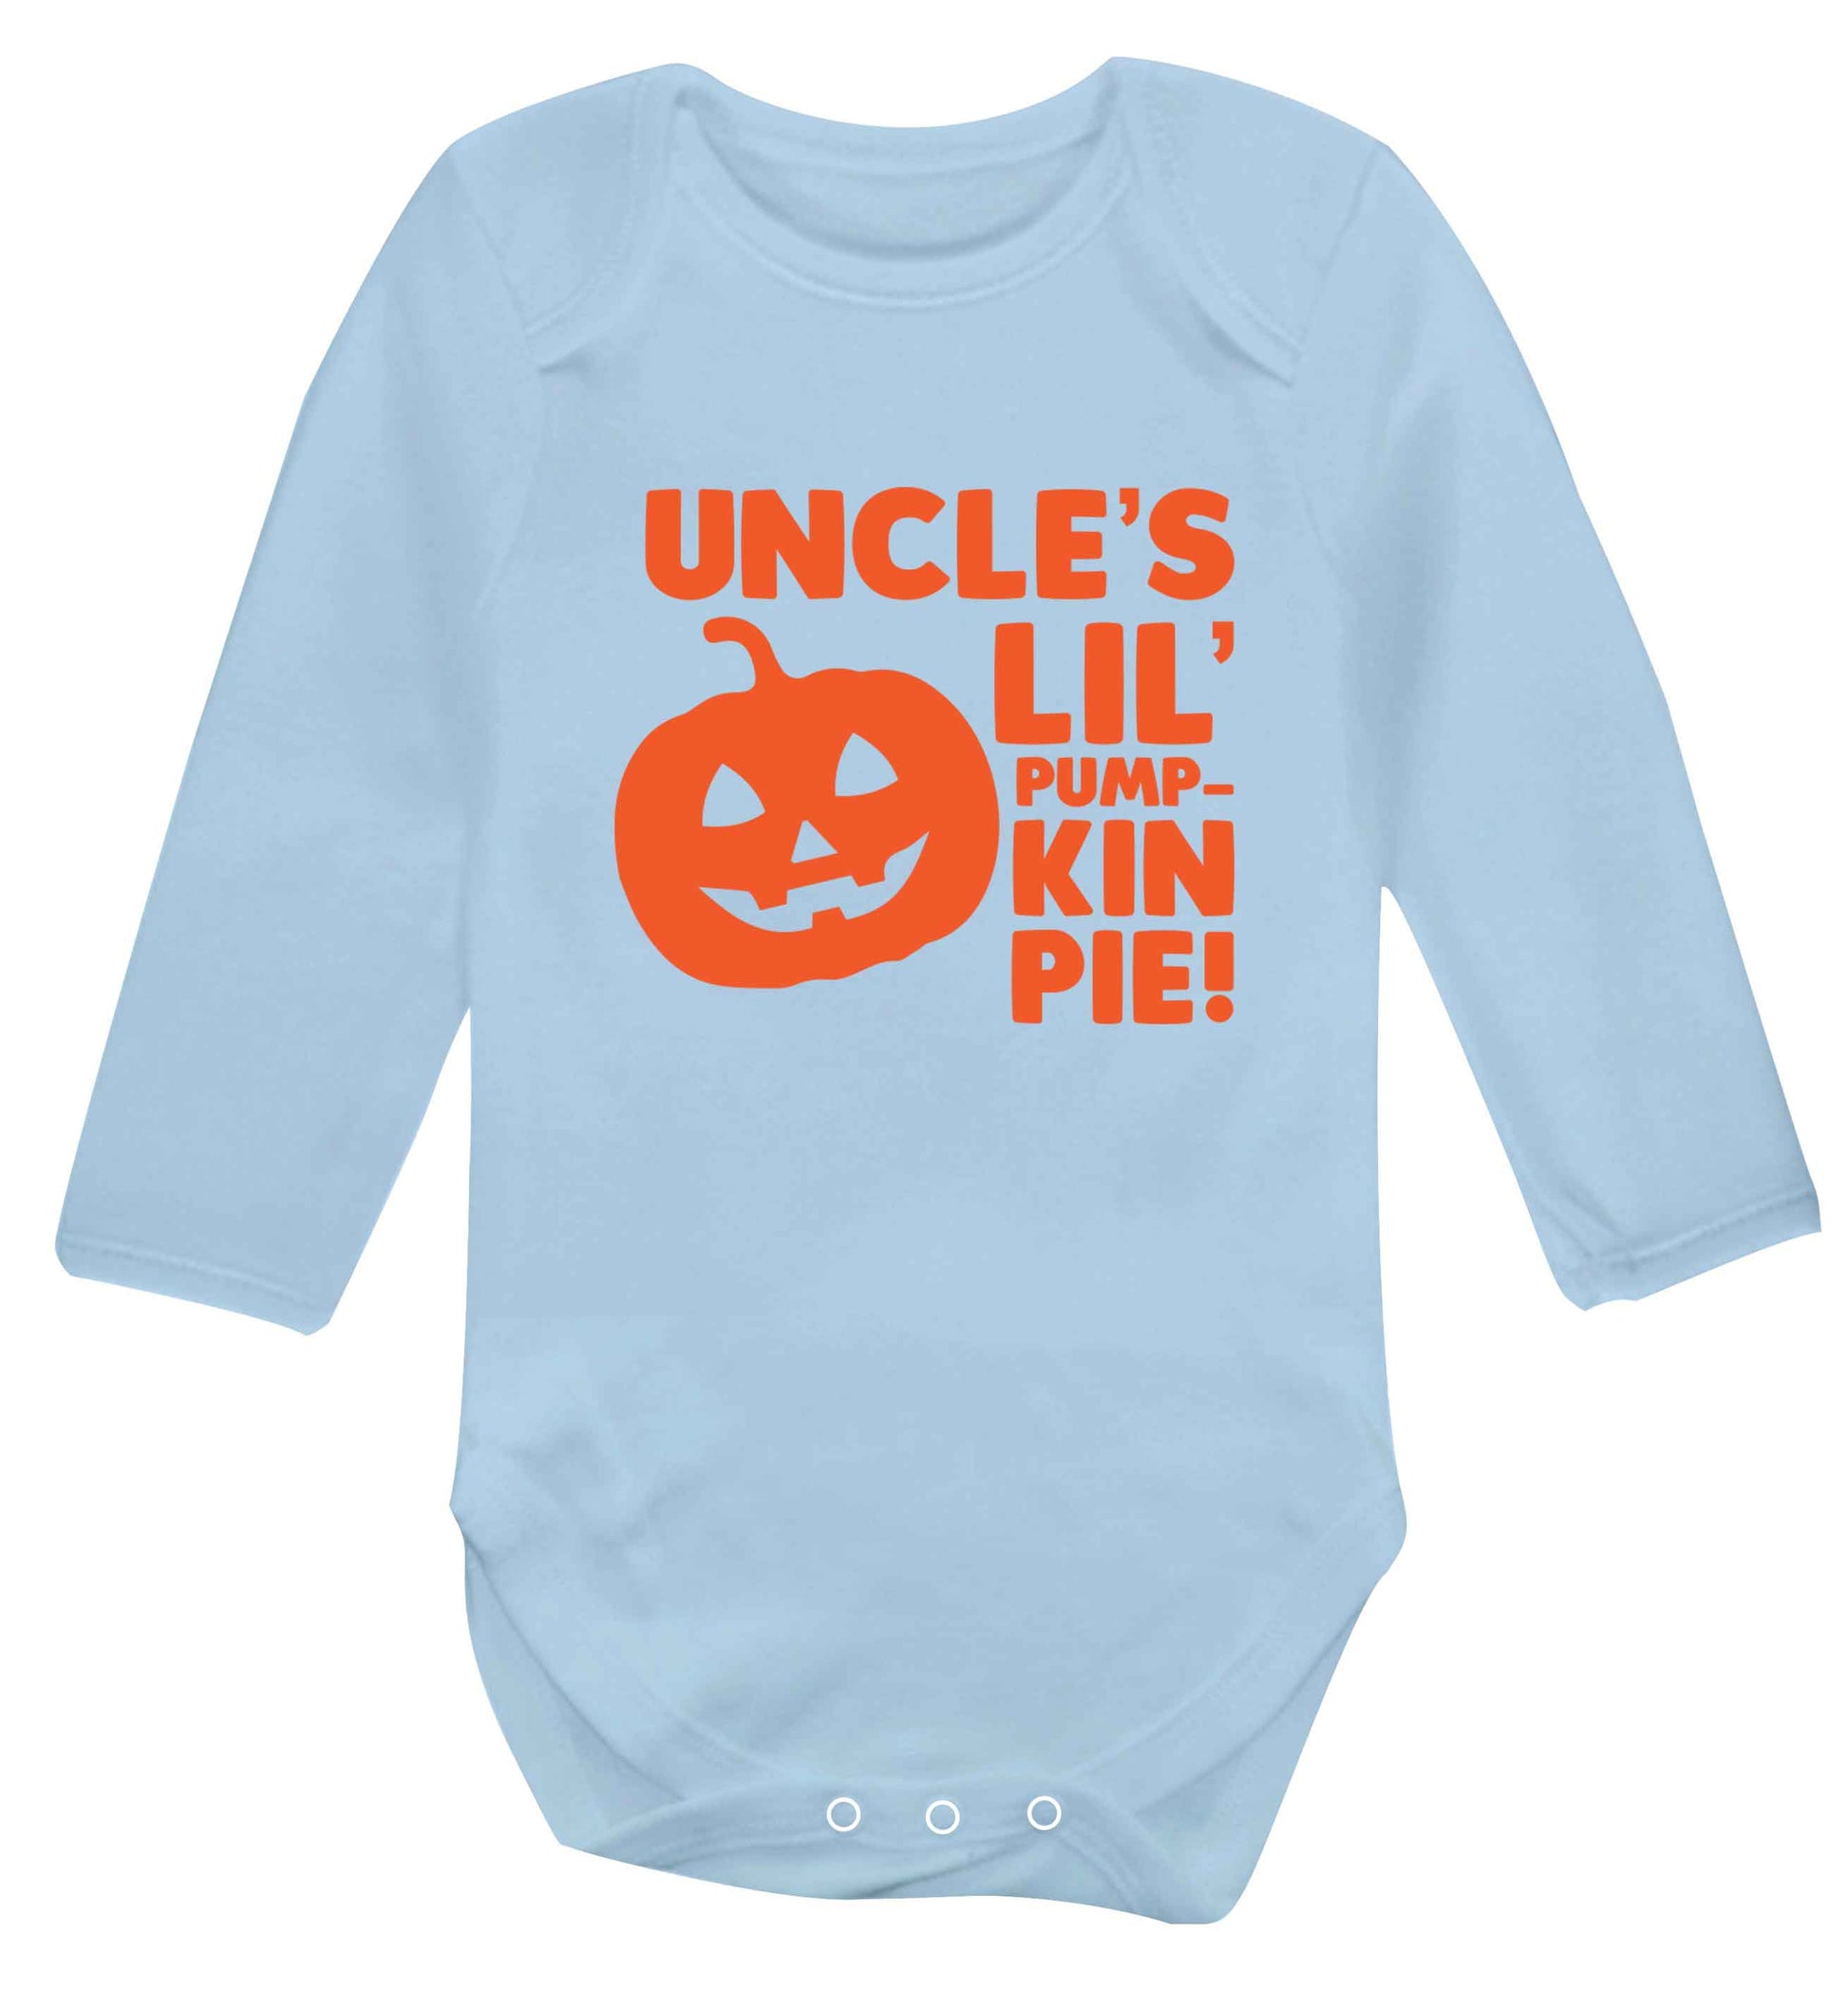 Uncle's lil' pumpkin pie baby vest long sleeved pale blue 6-12 months